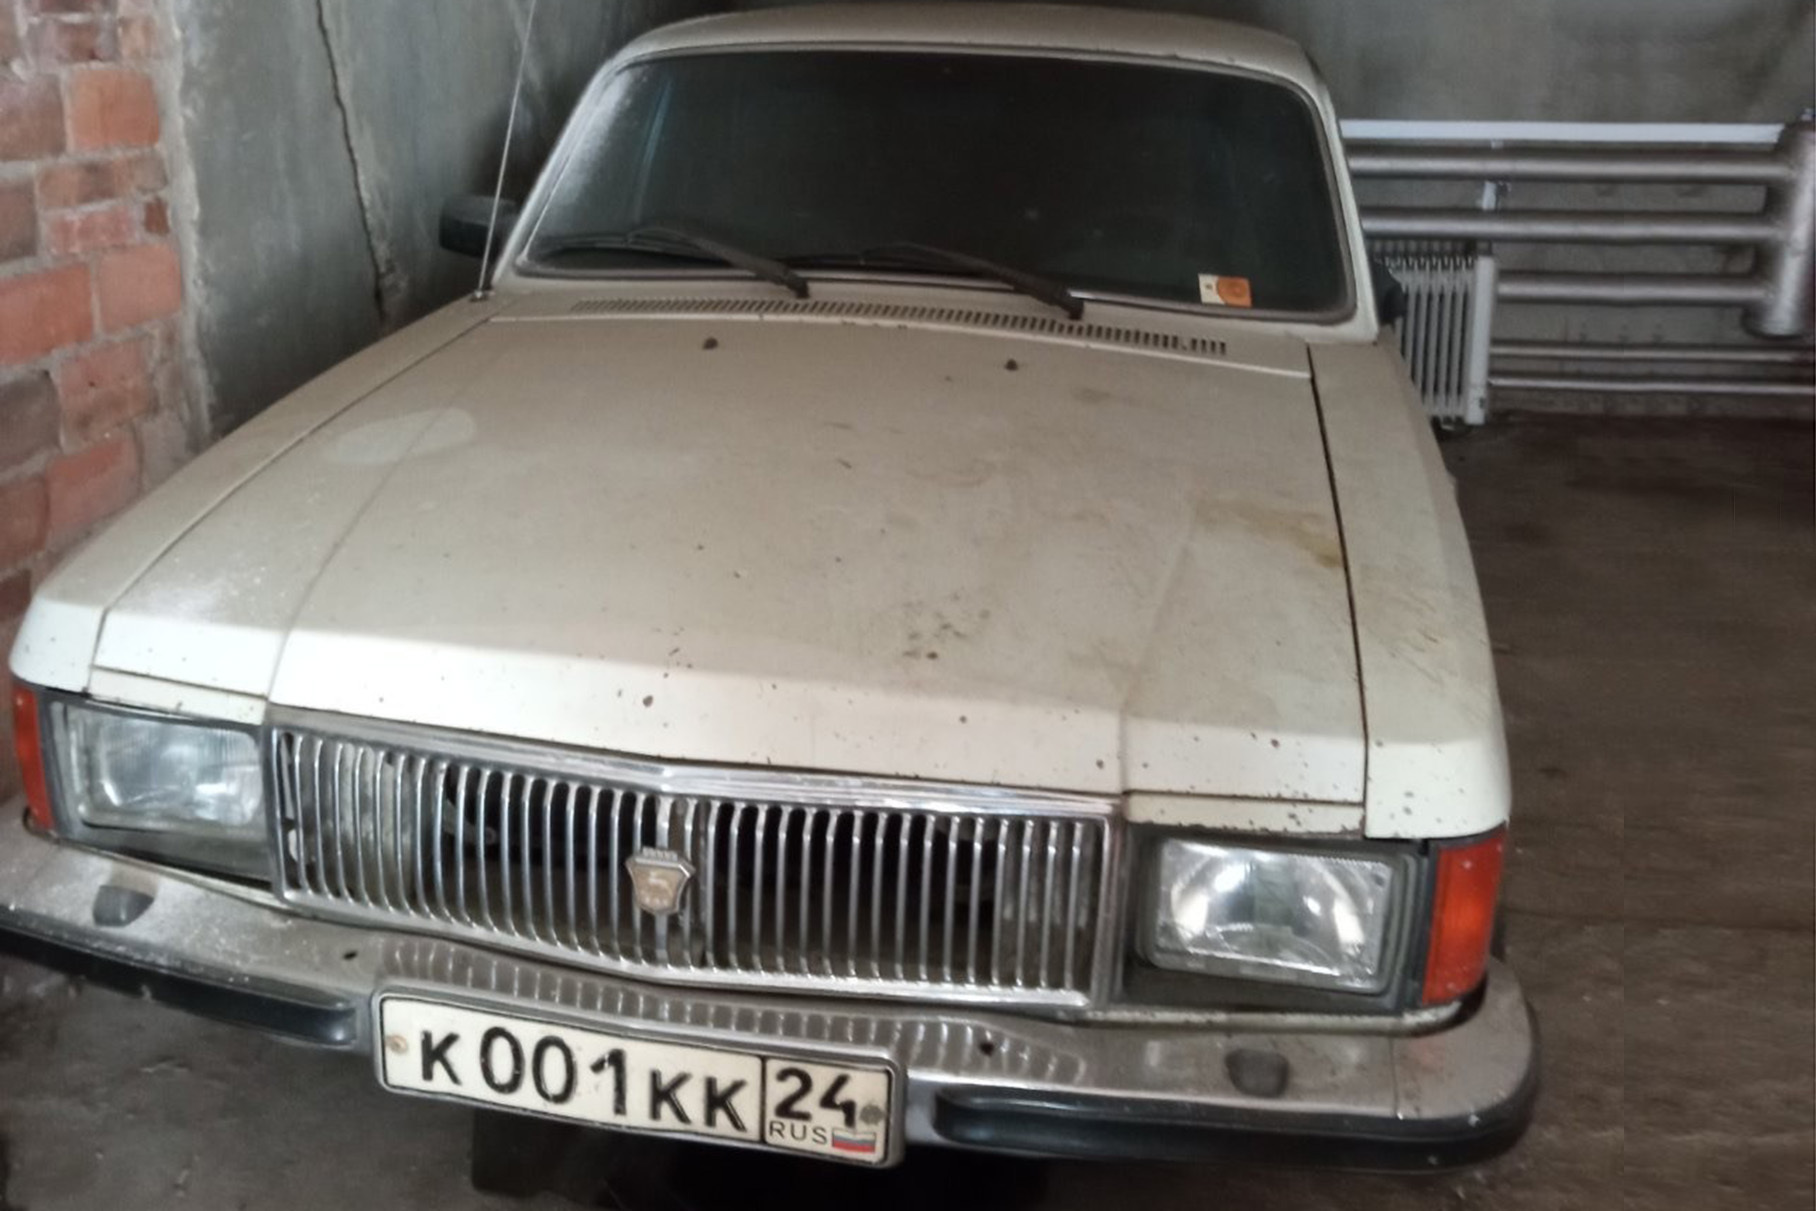 In Russia, the 1998 GAZ-3102 Volga sedan was sold for eight million rubles